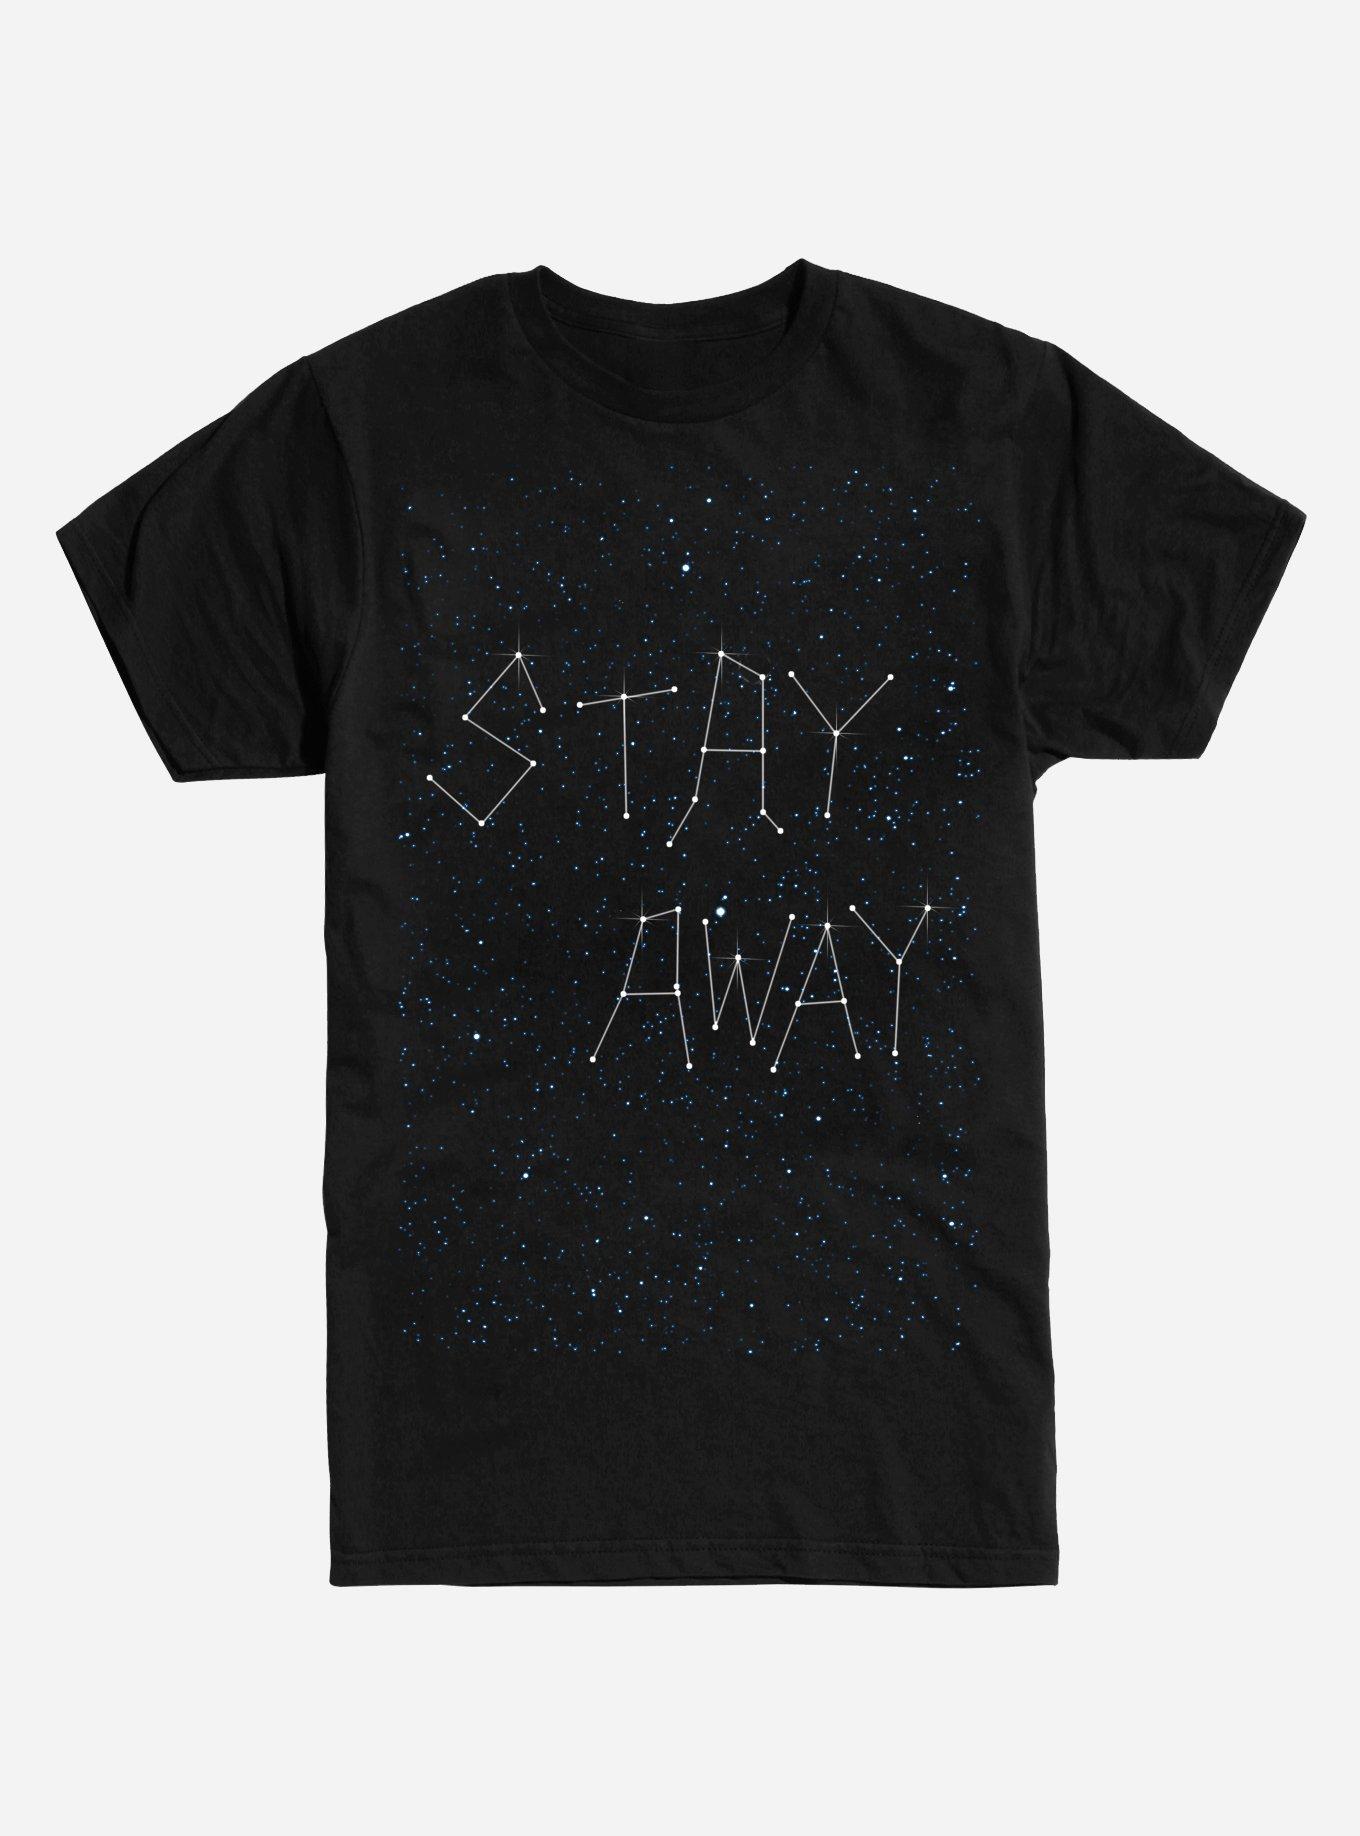 Stay Away Constellation T-Shirt, BLACK, hi-res